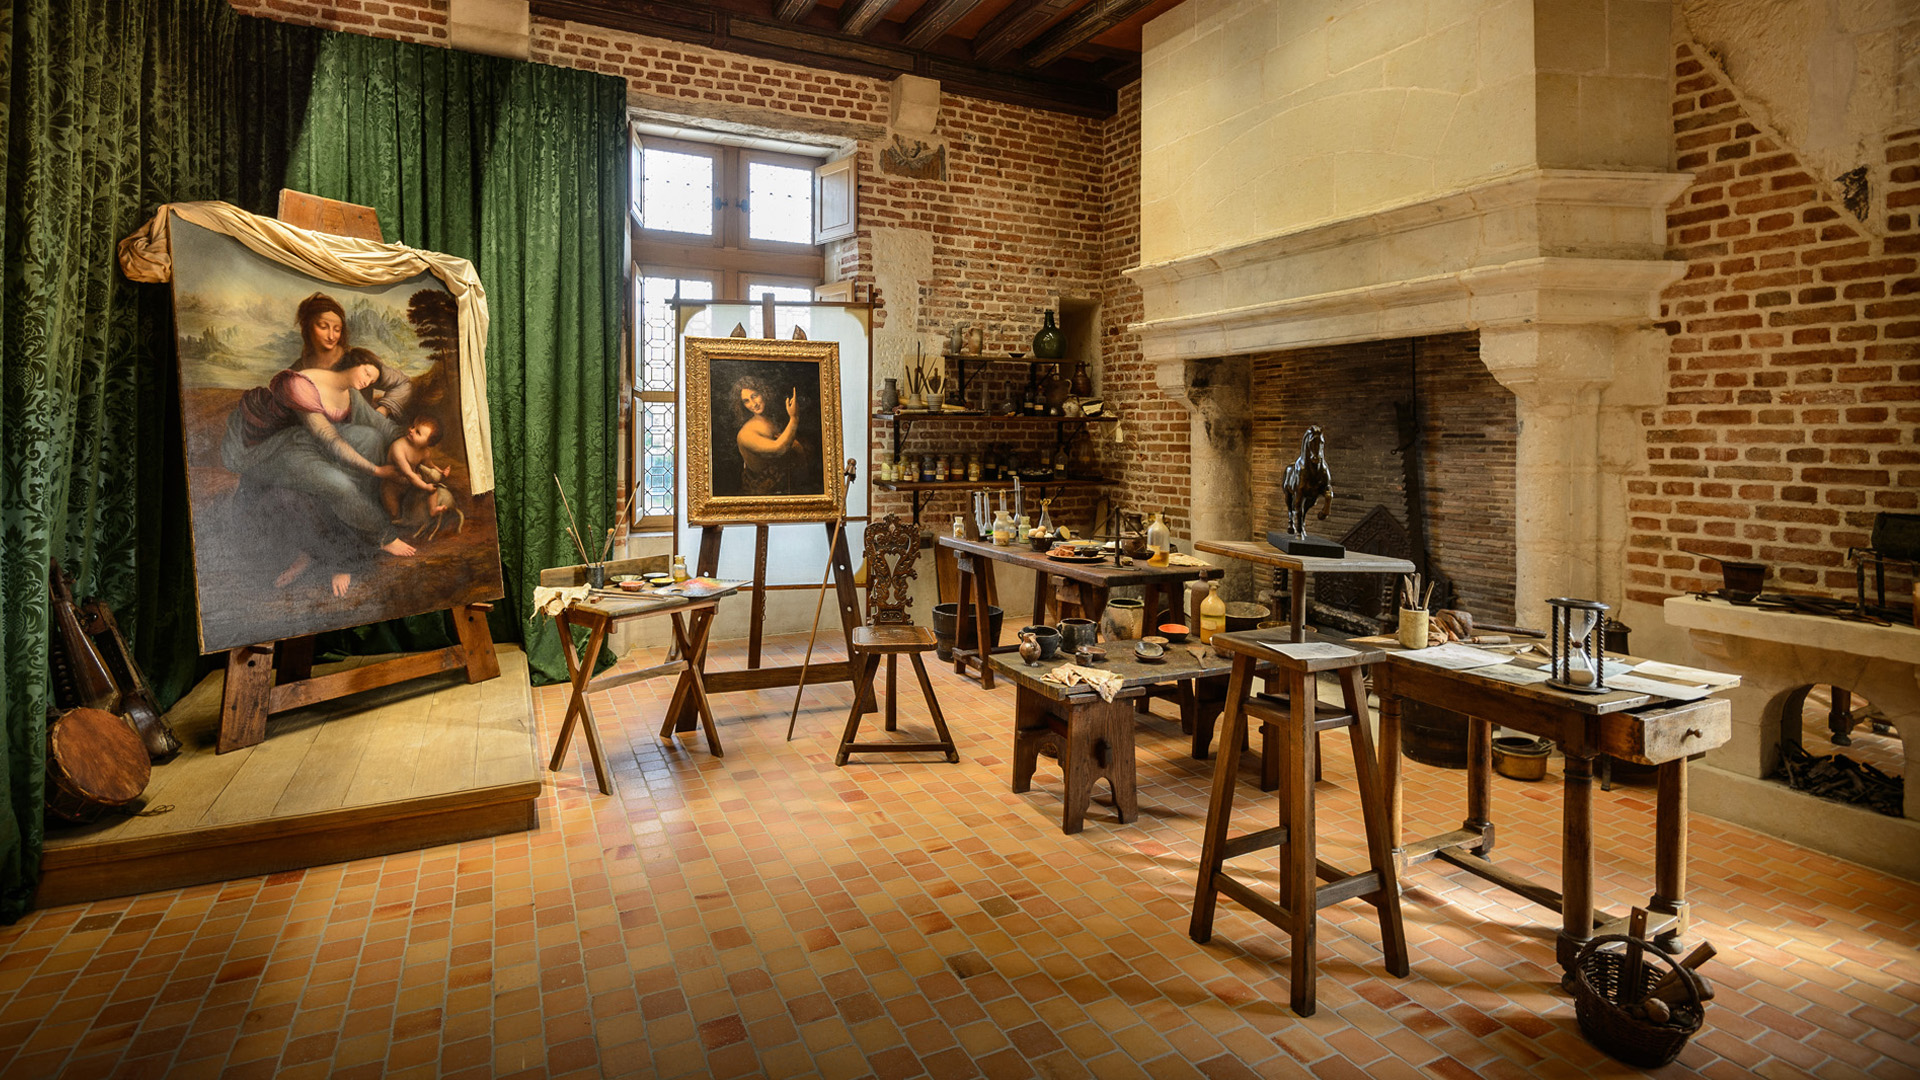 Leonardo da Vinci's studio